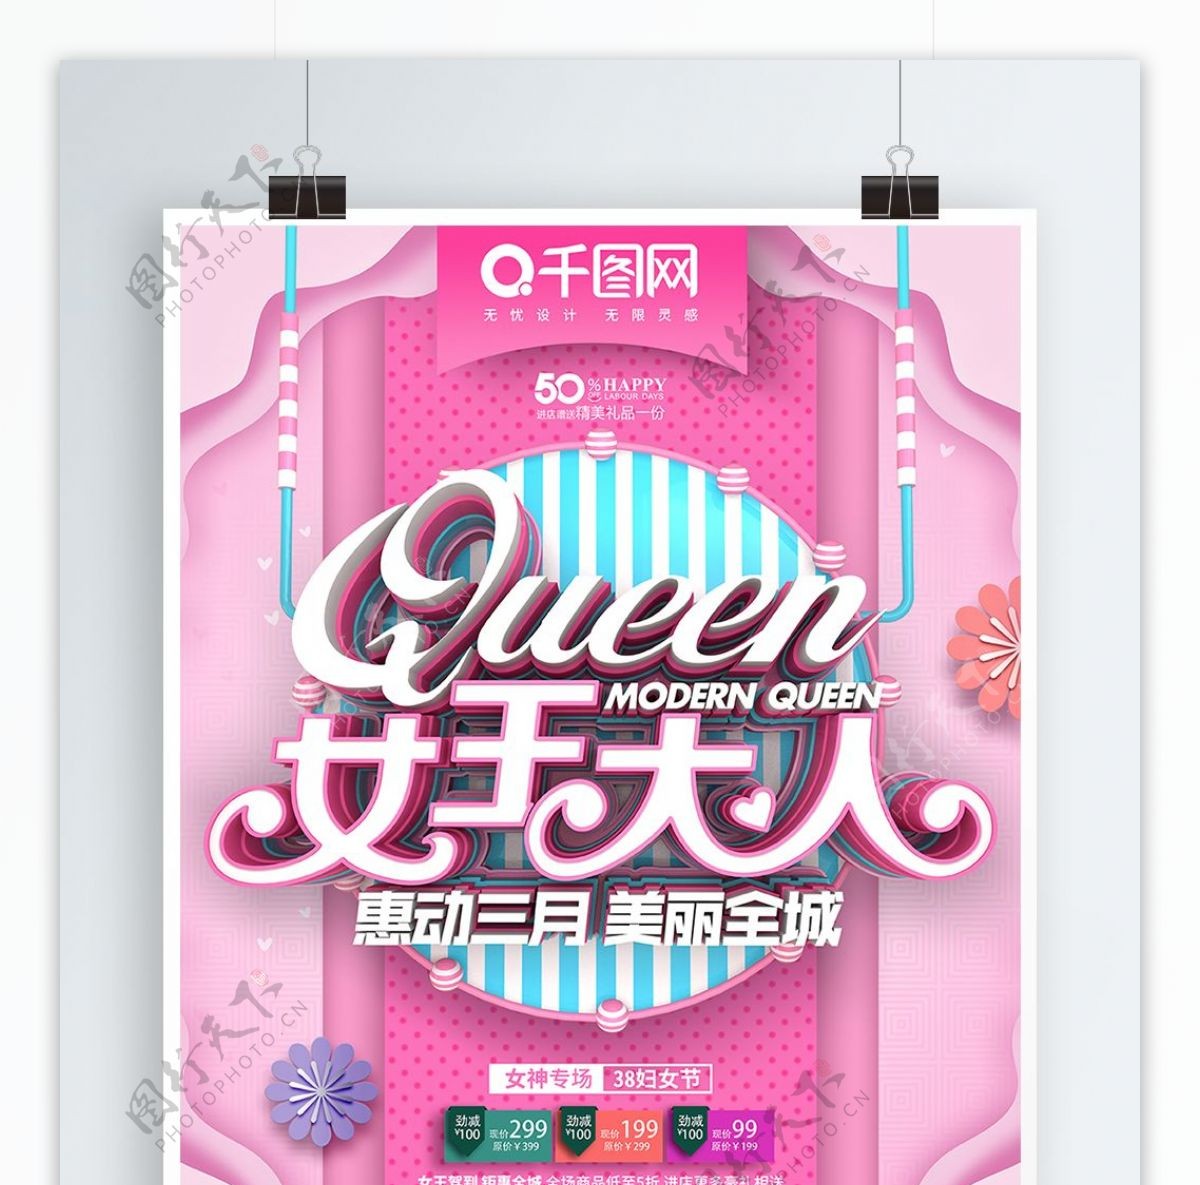 C4D创意粉色立体女王大人38女神节海报